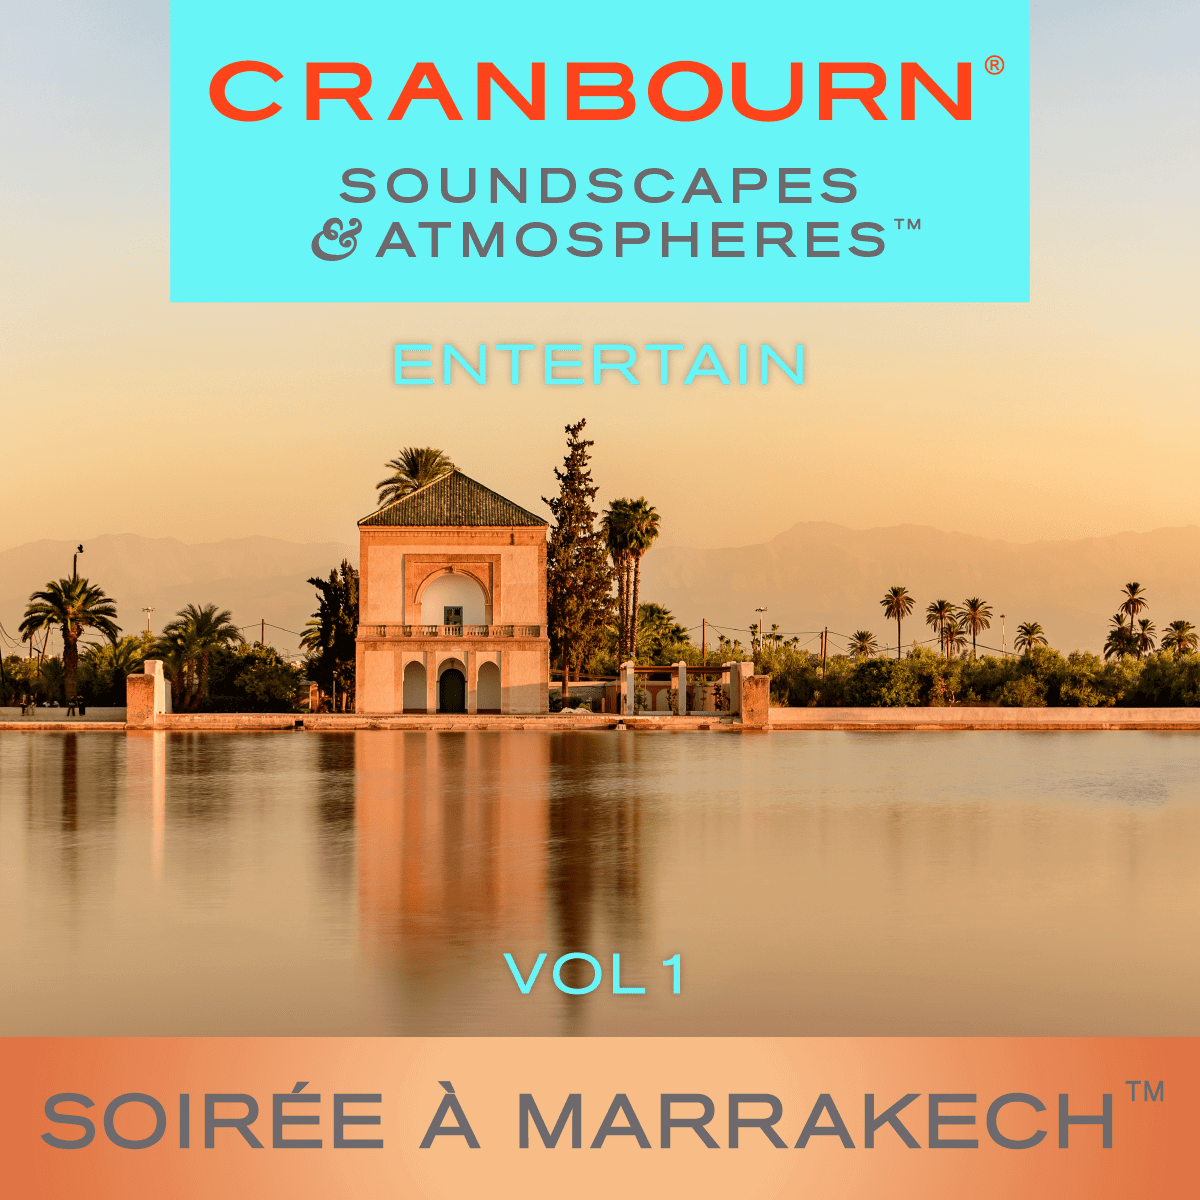 Soiree A Marrakech™